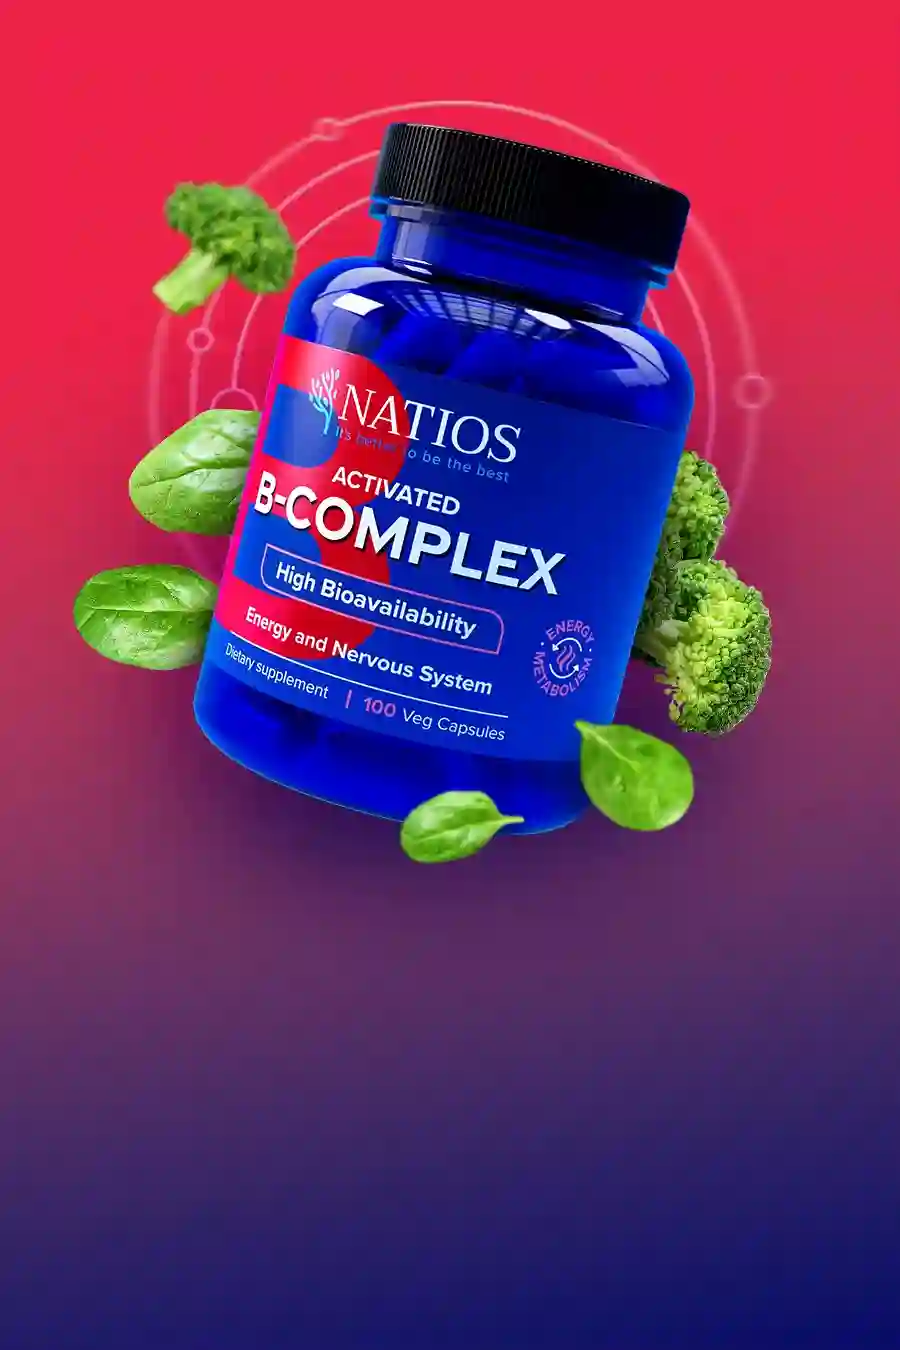 Natios Vitamin B complex